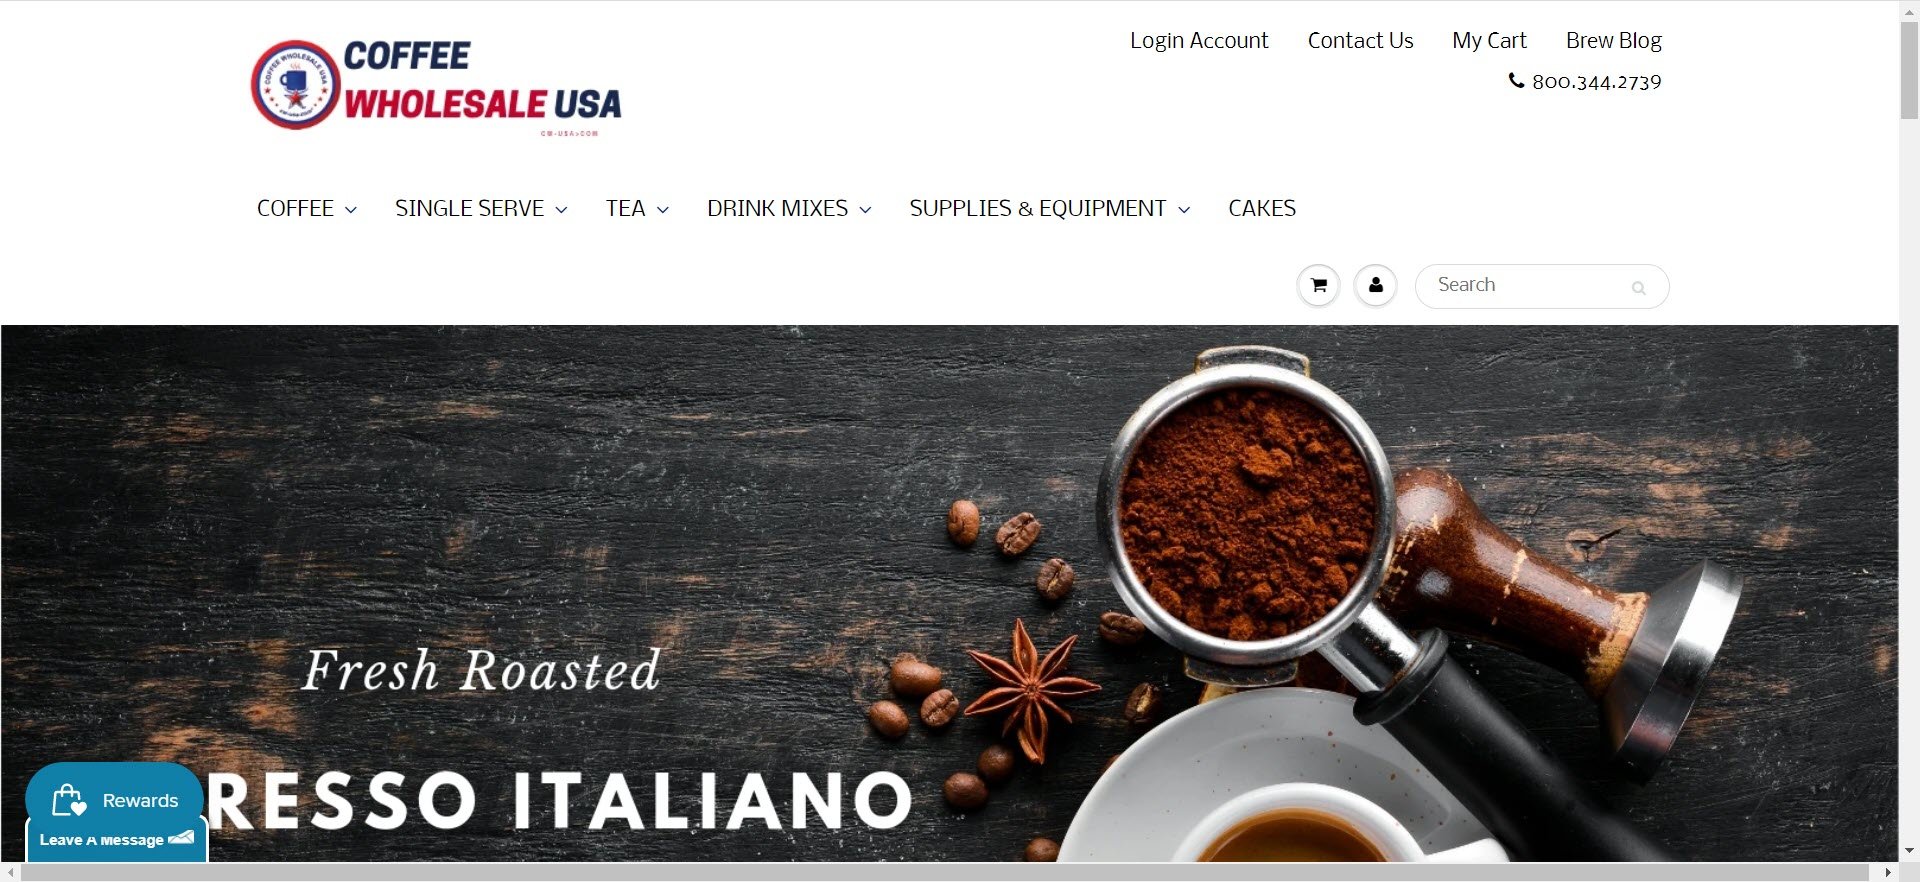 coffee affiliate programs - Coffee Wholesale USA